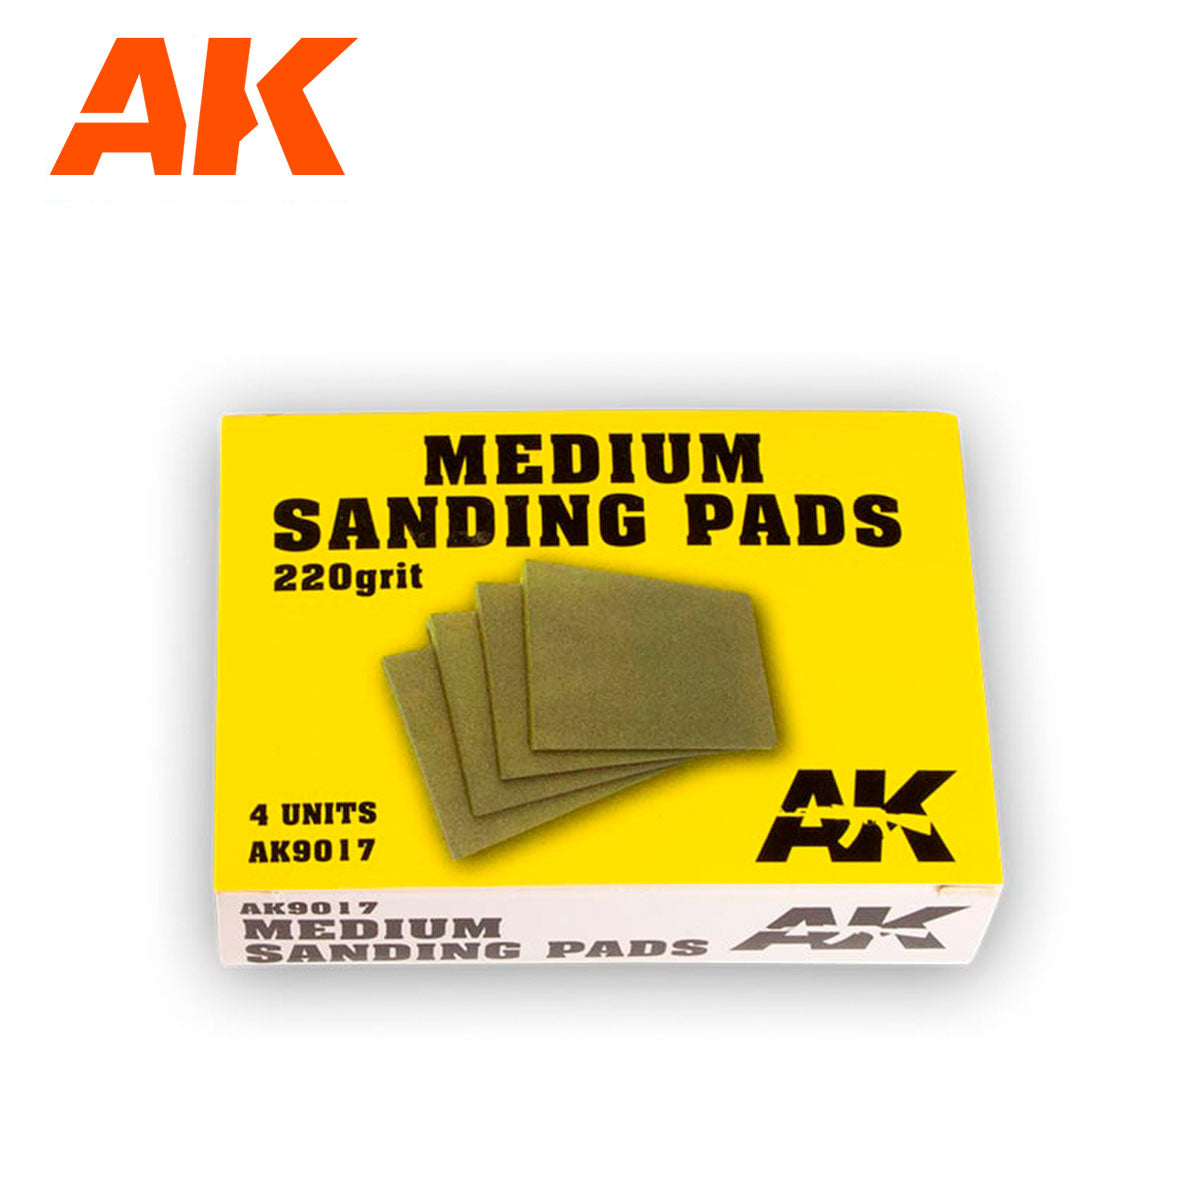 AK9017 - Medium Sanding Pads - 220 grit (4 in a pack) Yellow Box